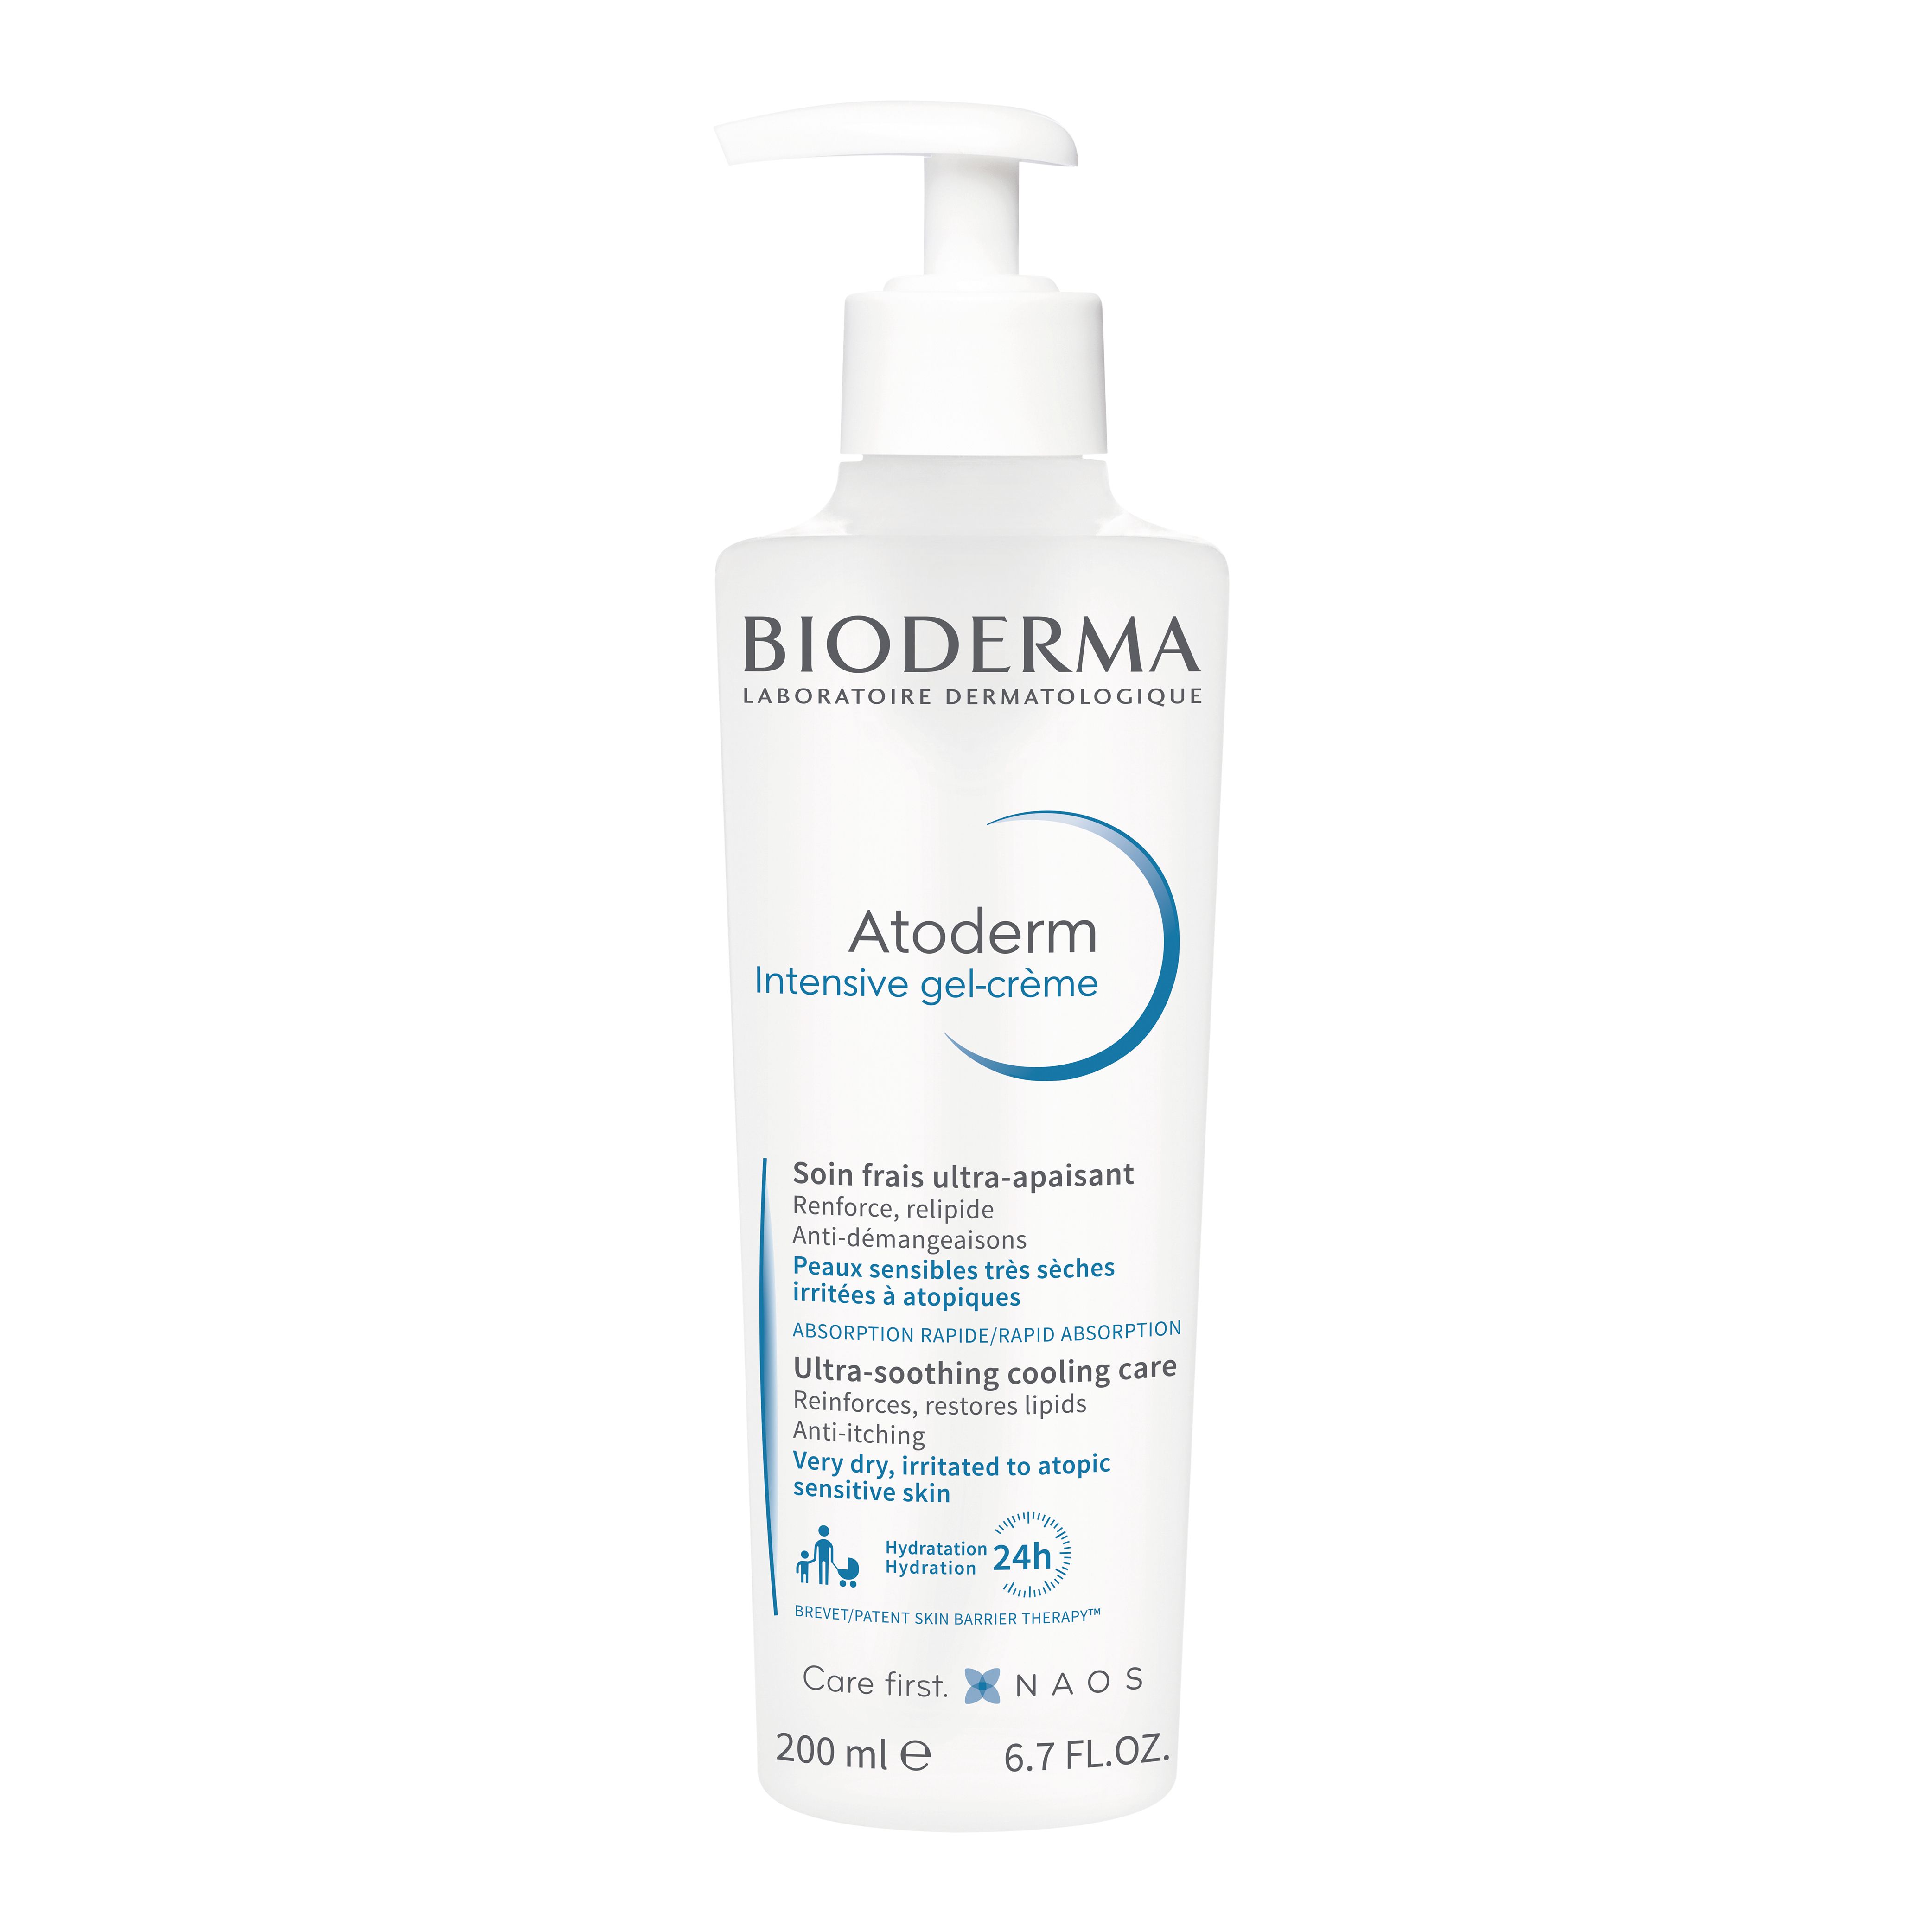 Bioderma Atoderm Intensive Gel-Crème​